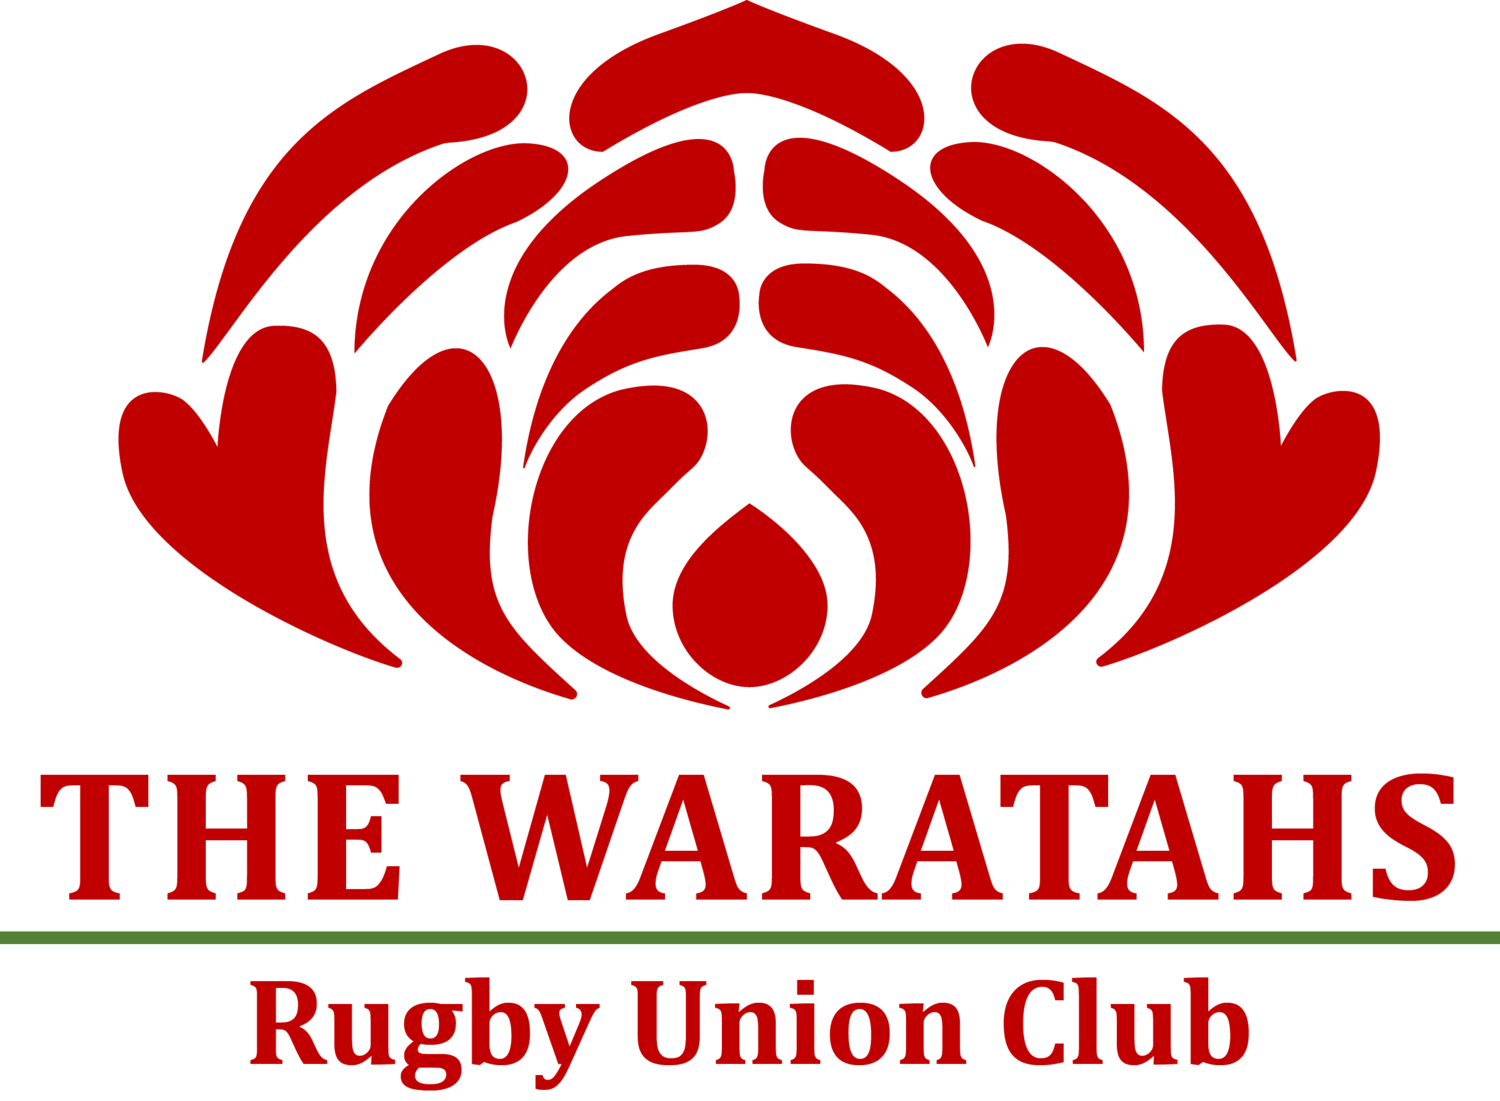 The Collaborative Waratahs Rugby Union Club